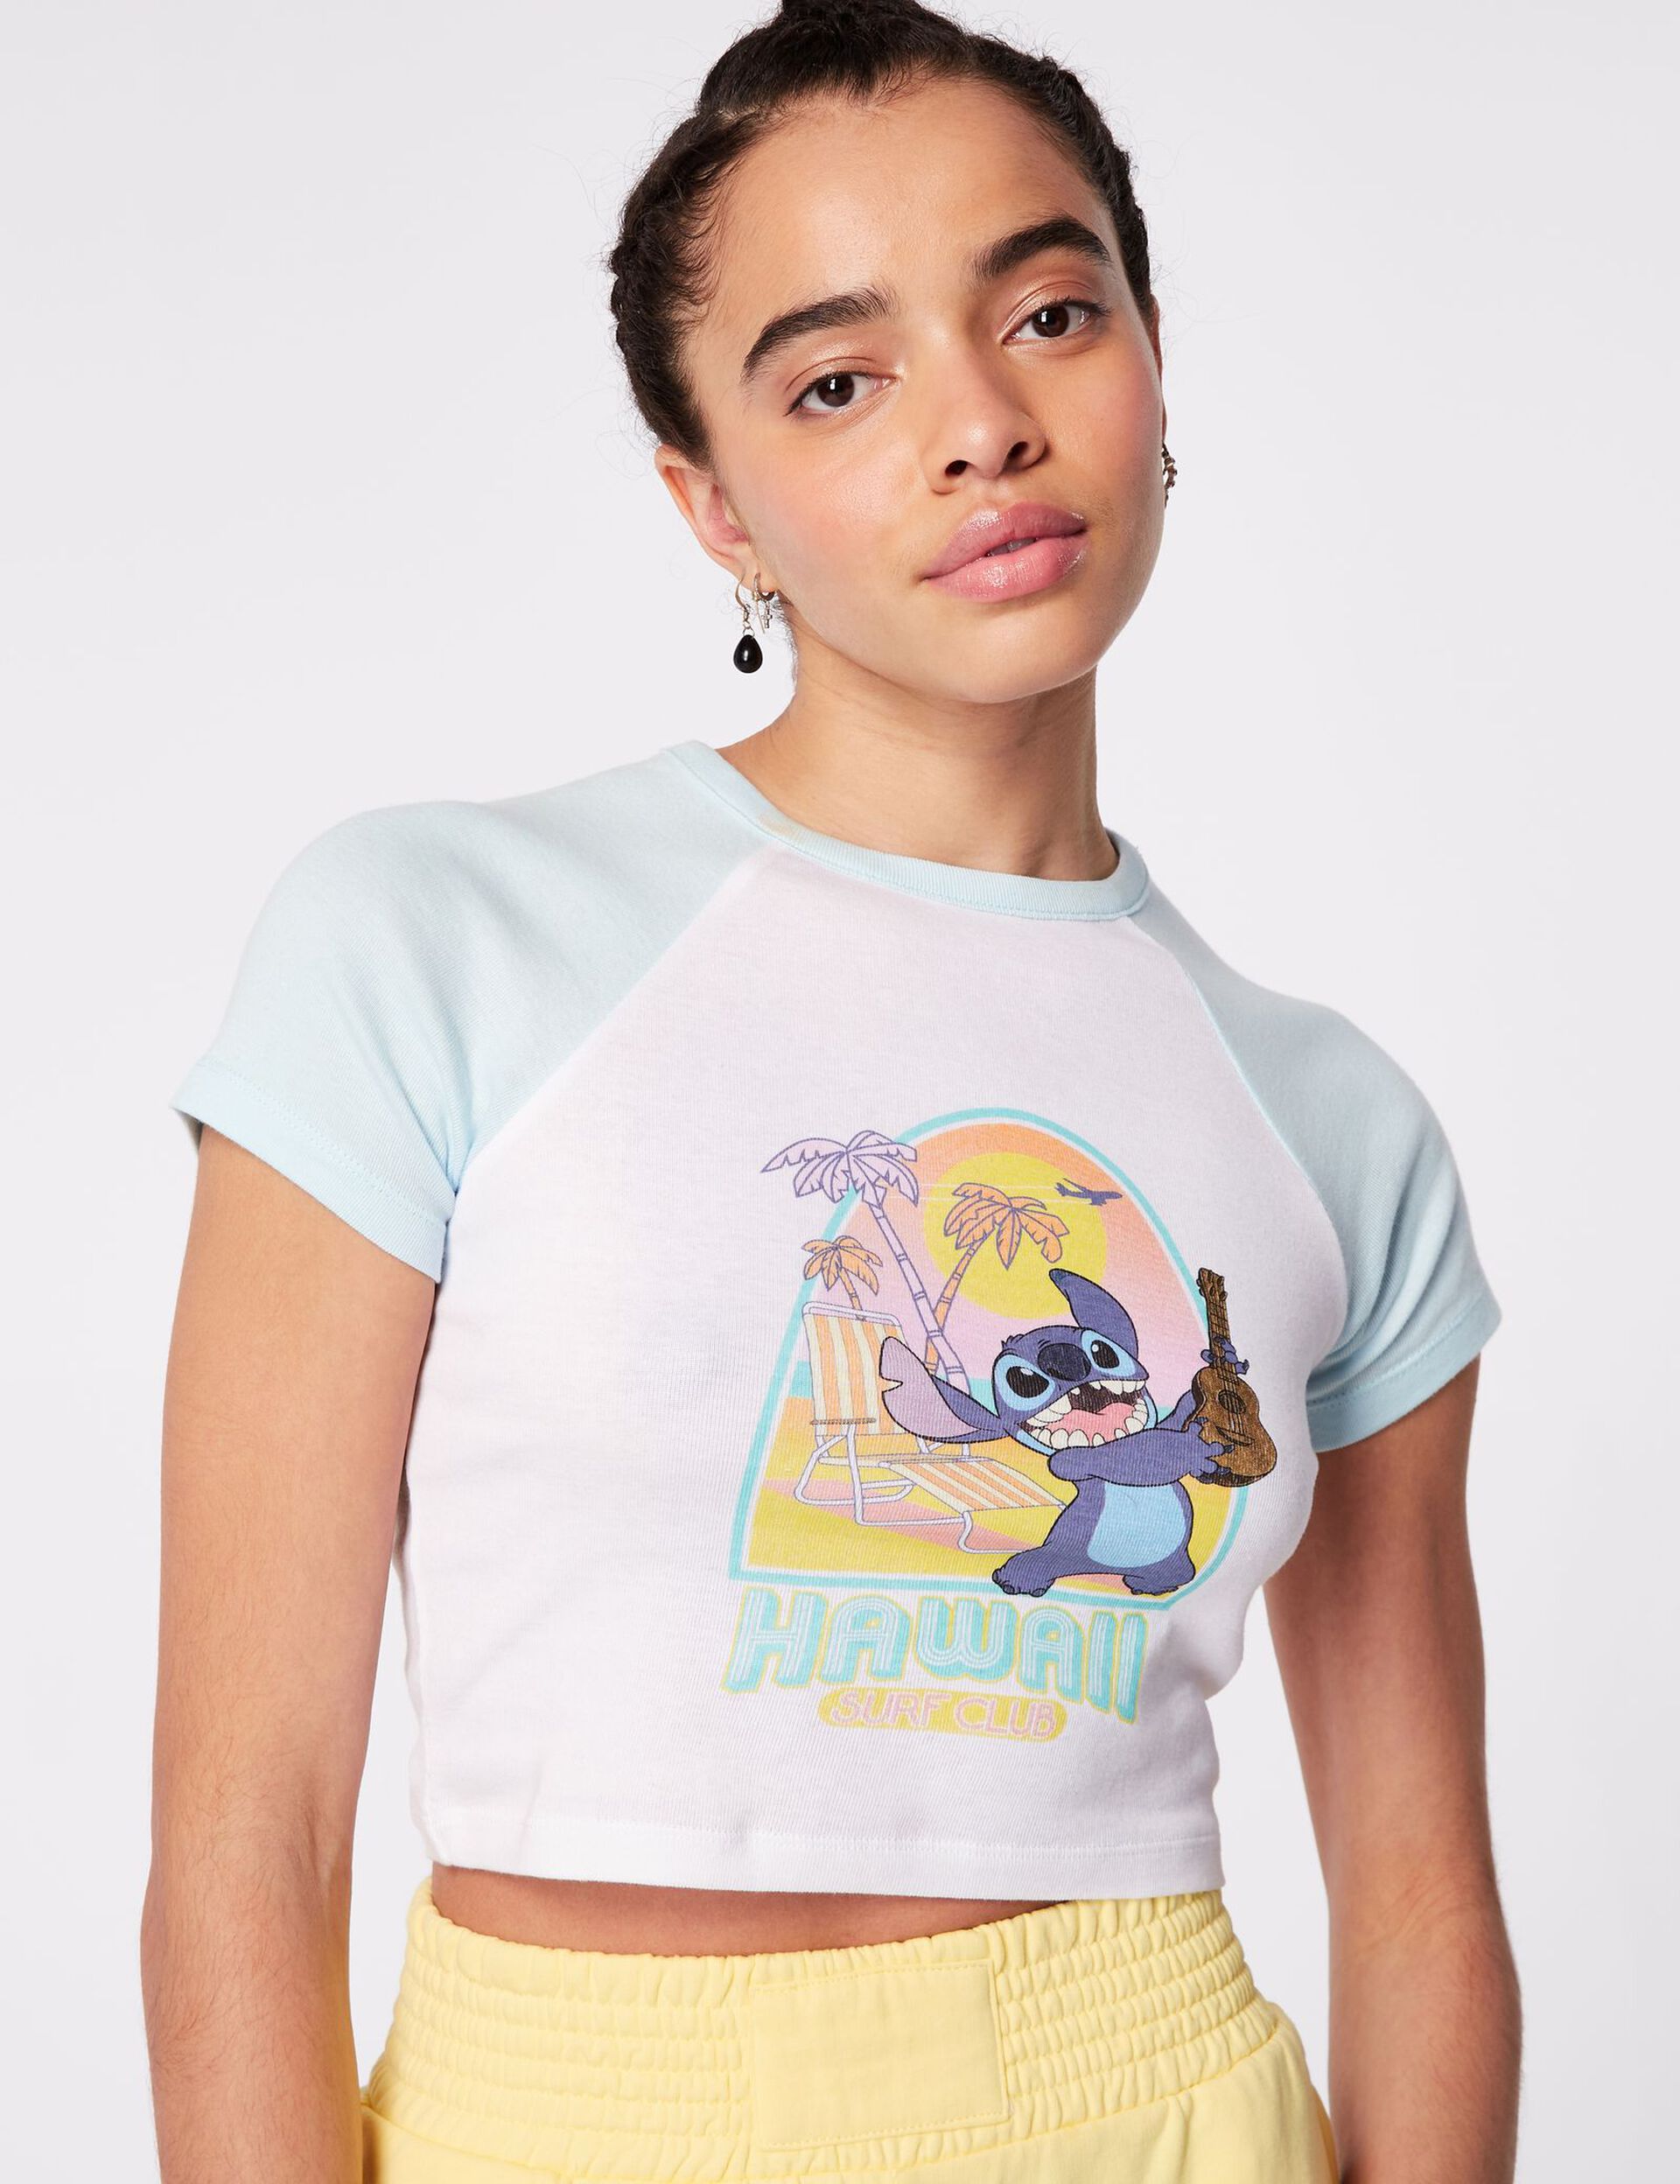 Disney Stitch T-shirt